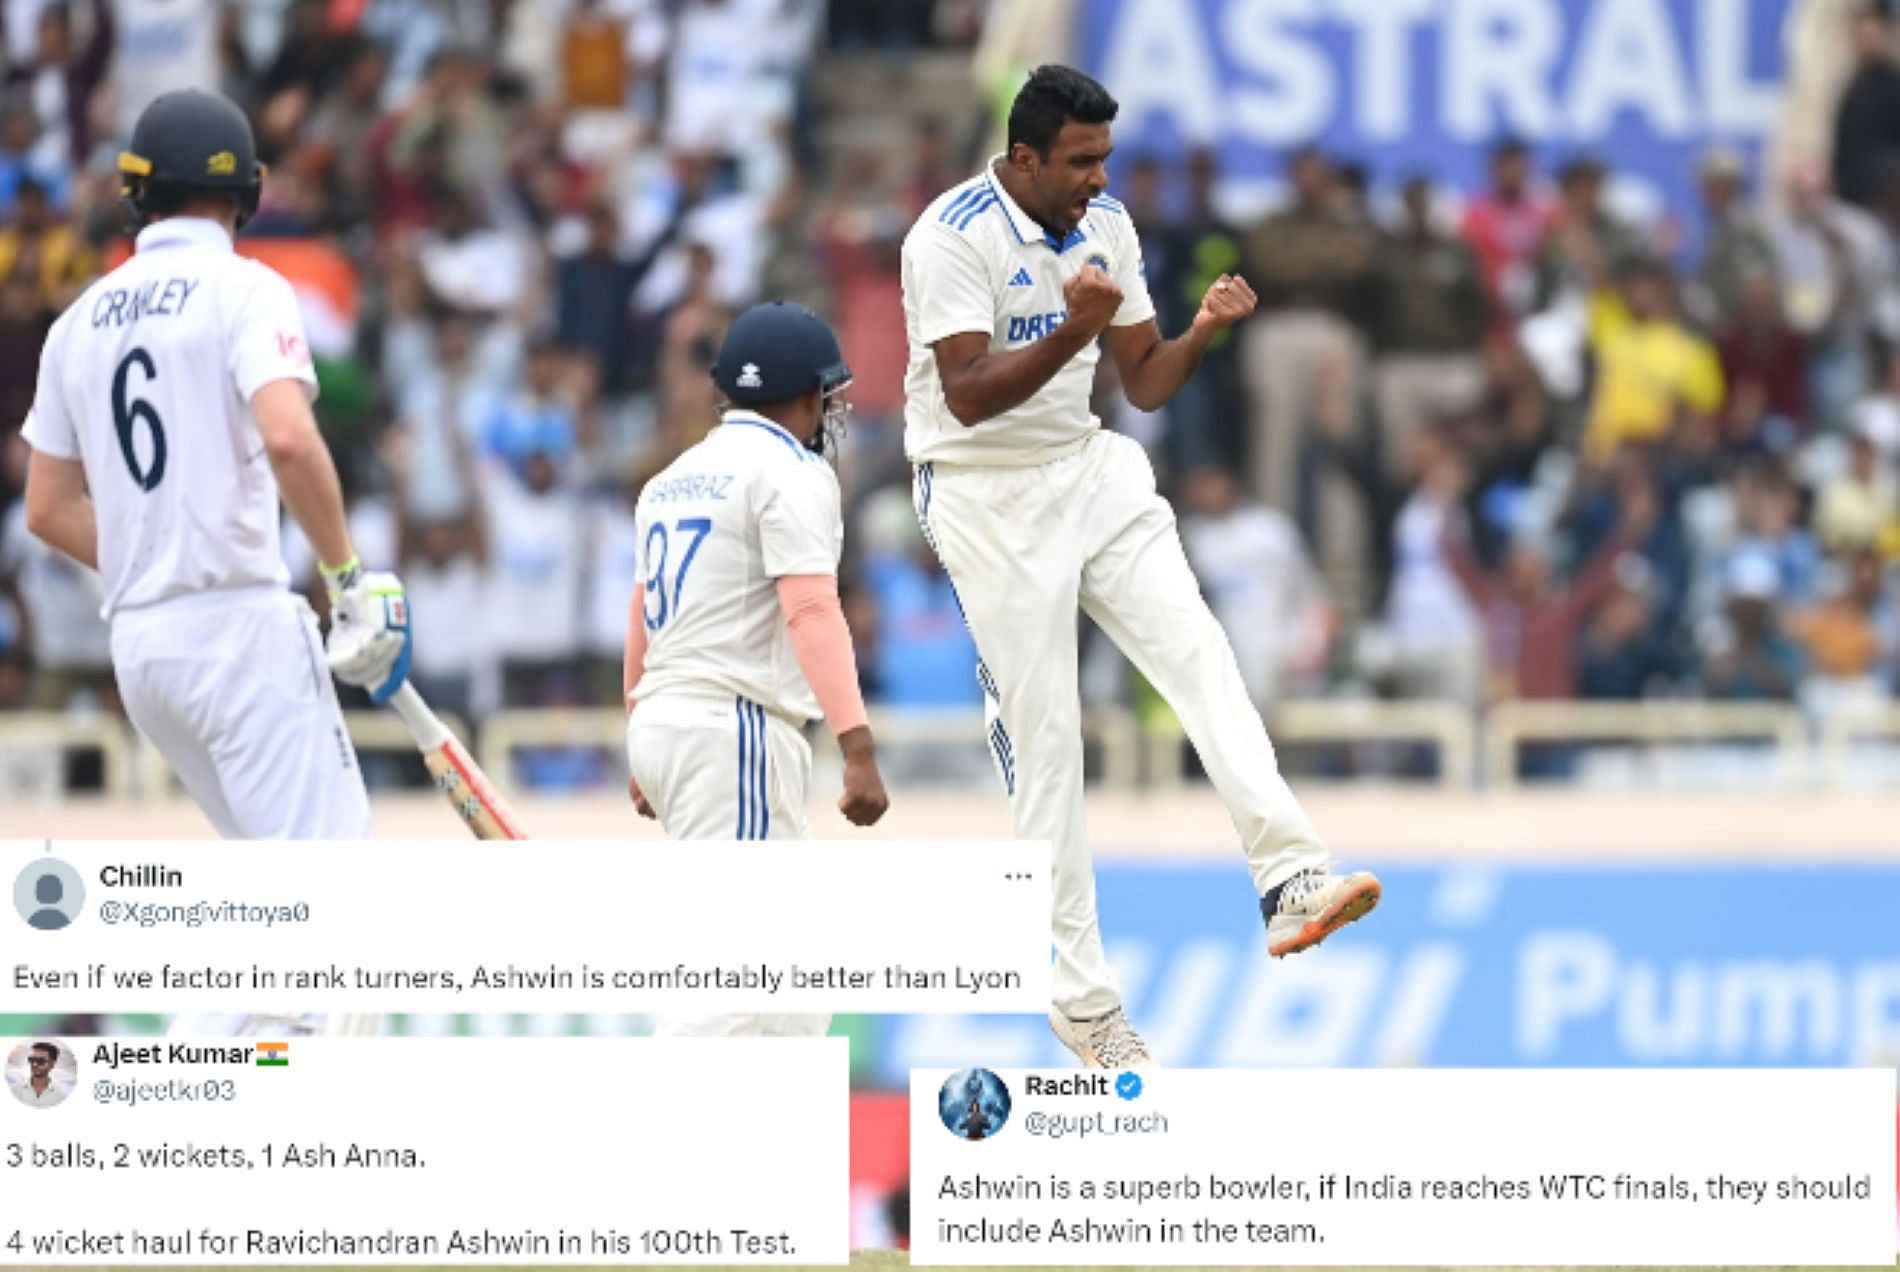 Ashwin made a sensational start to his 100th Test